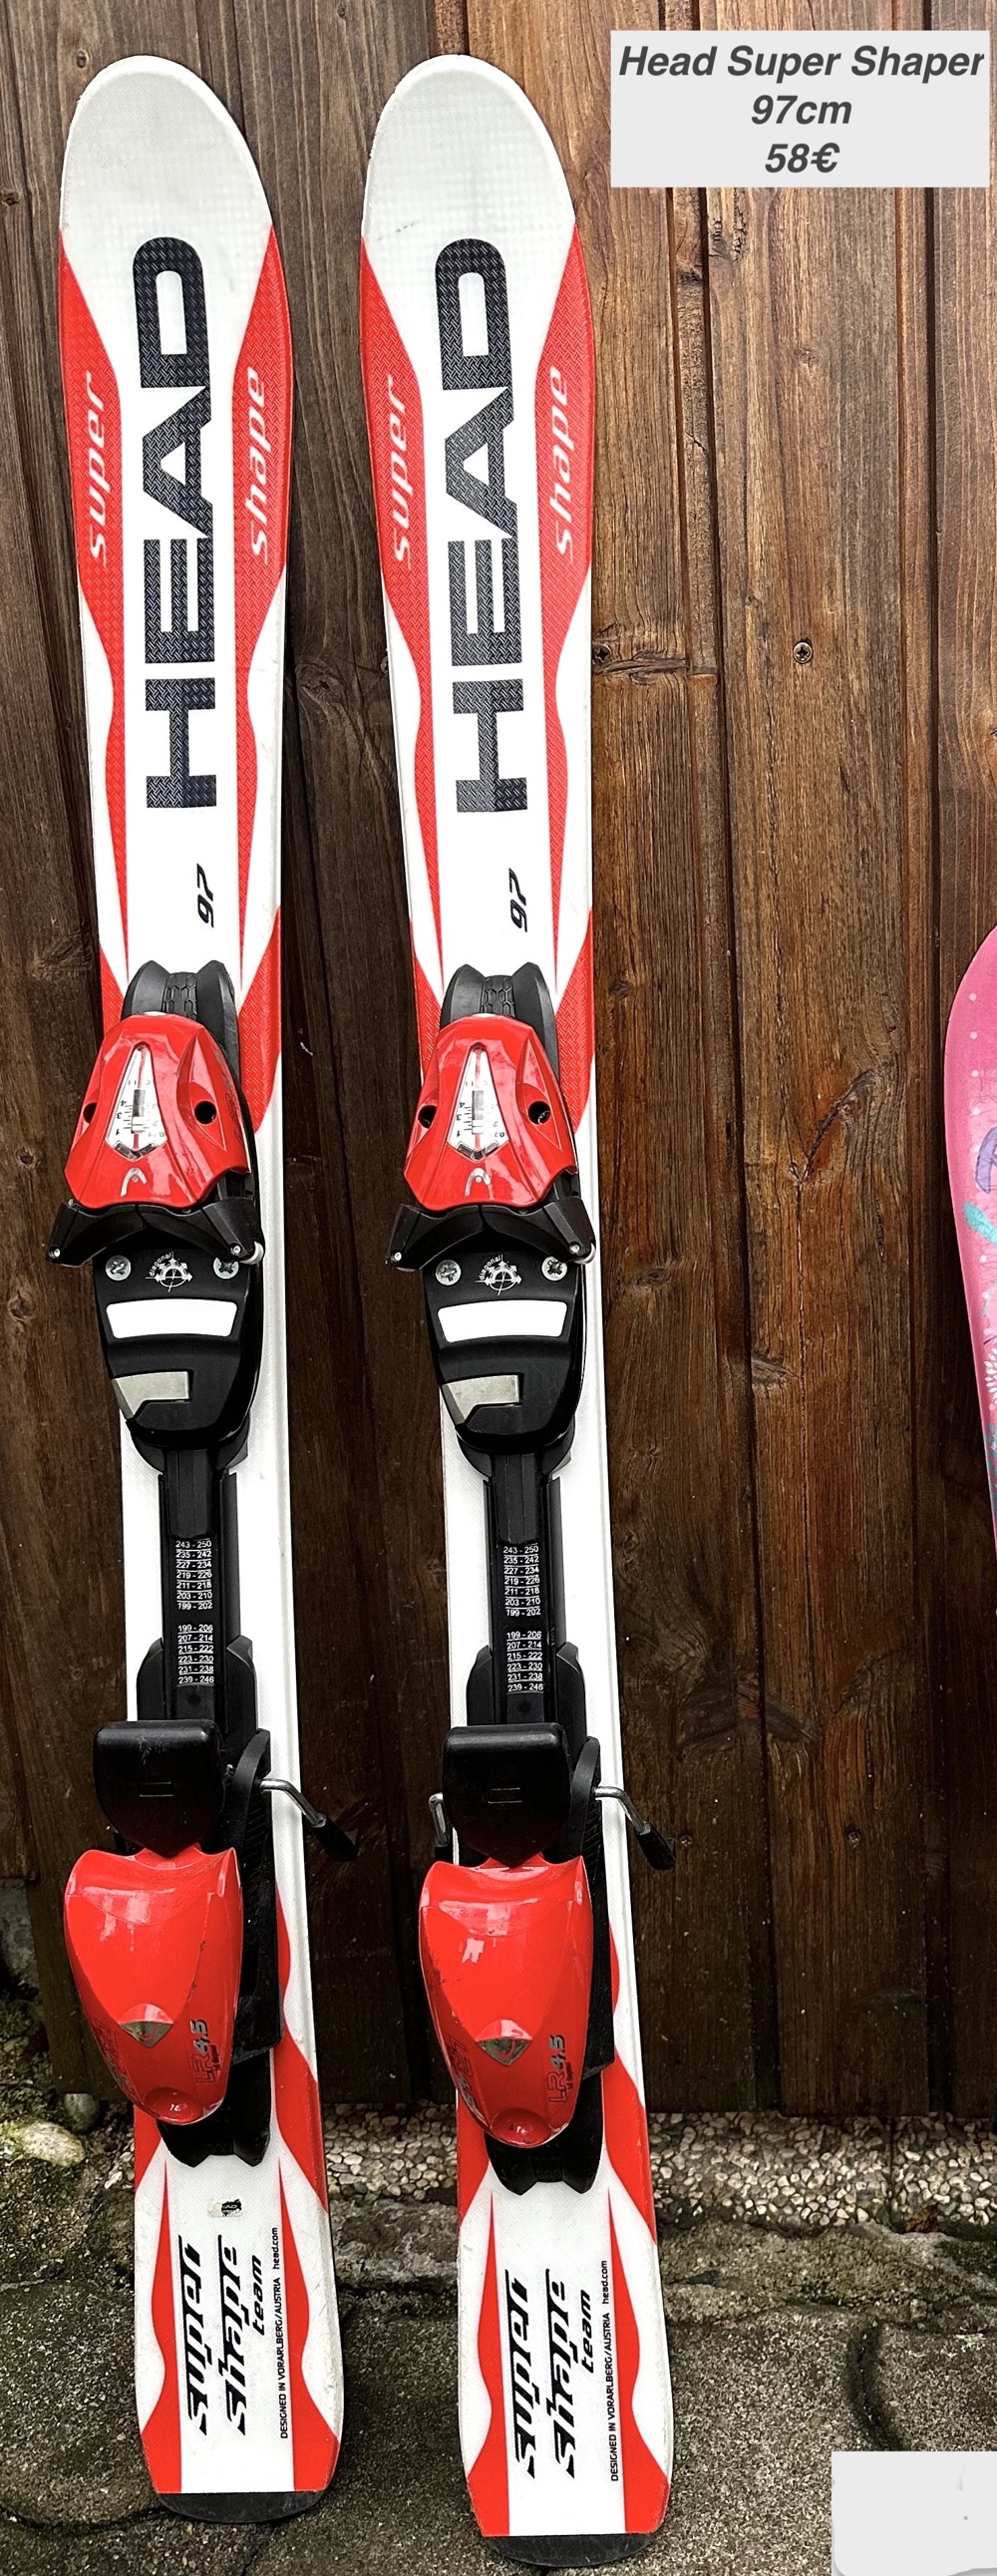 Ski Schi Head super shaper 97cm